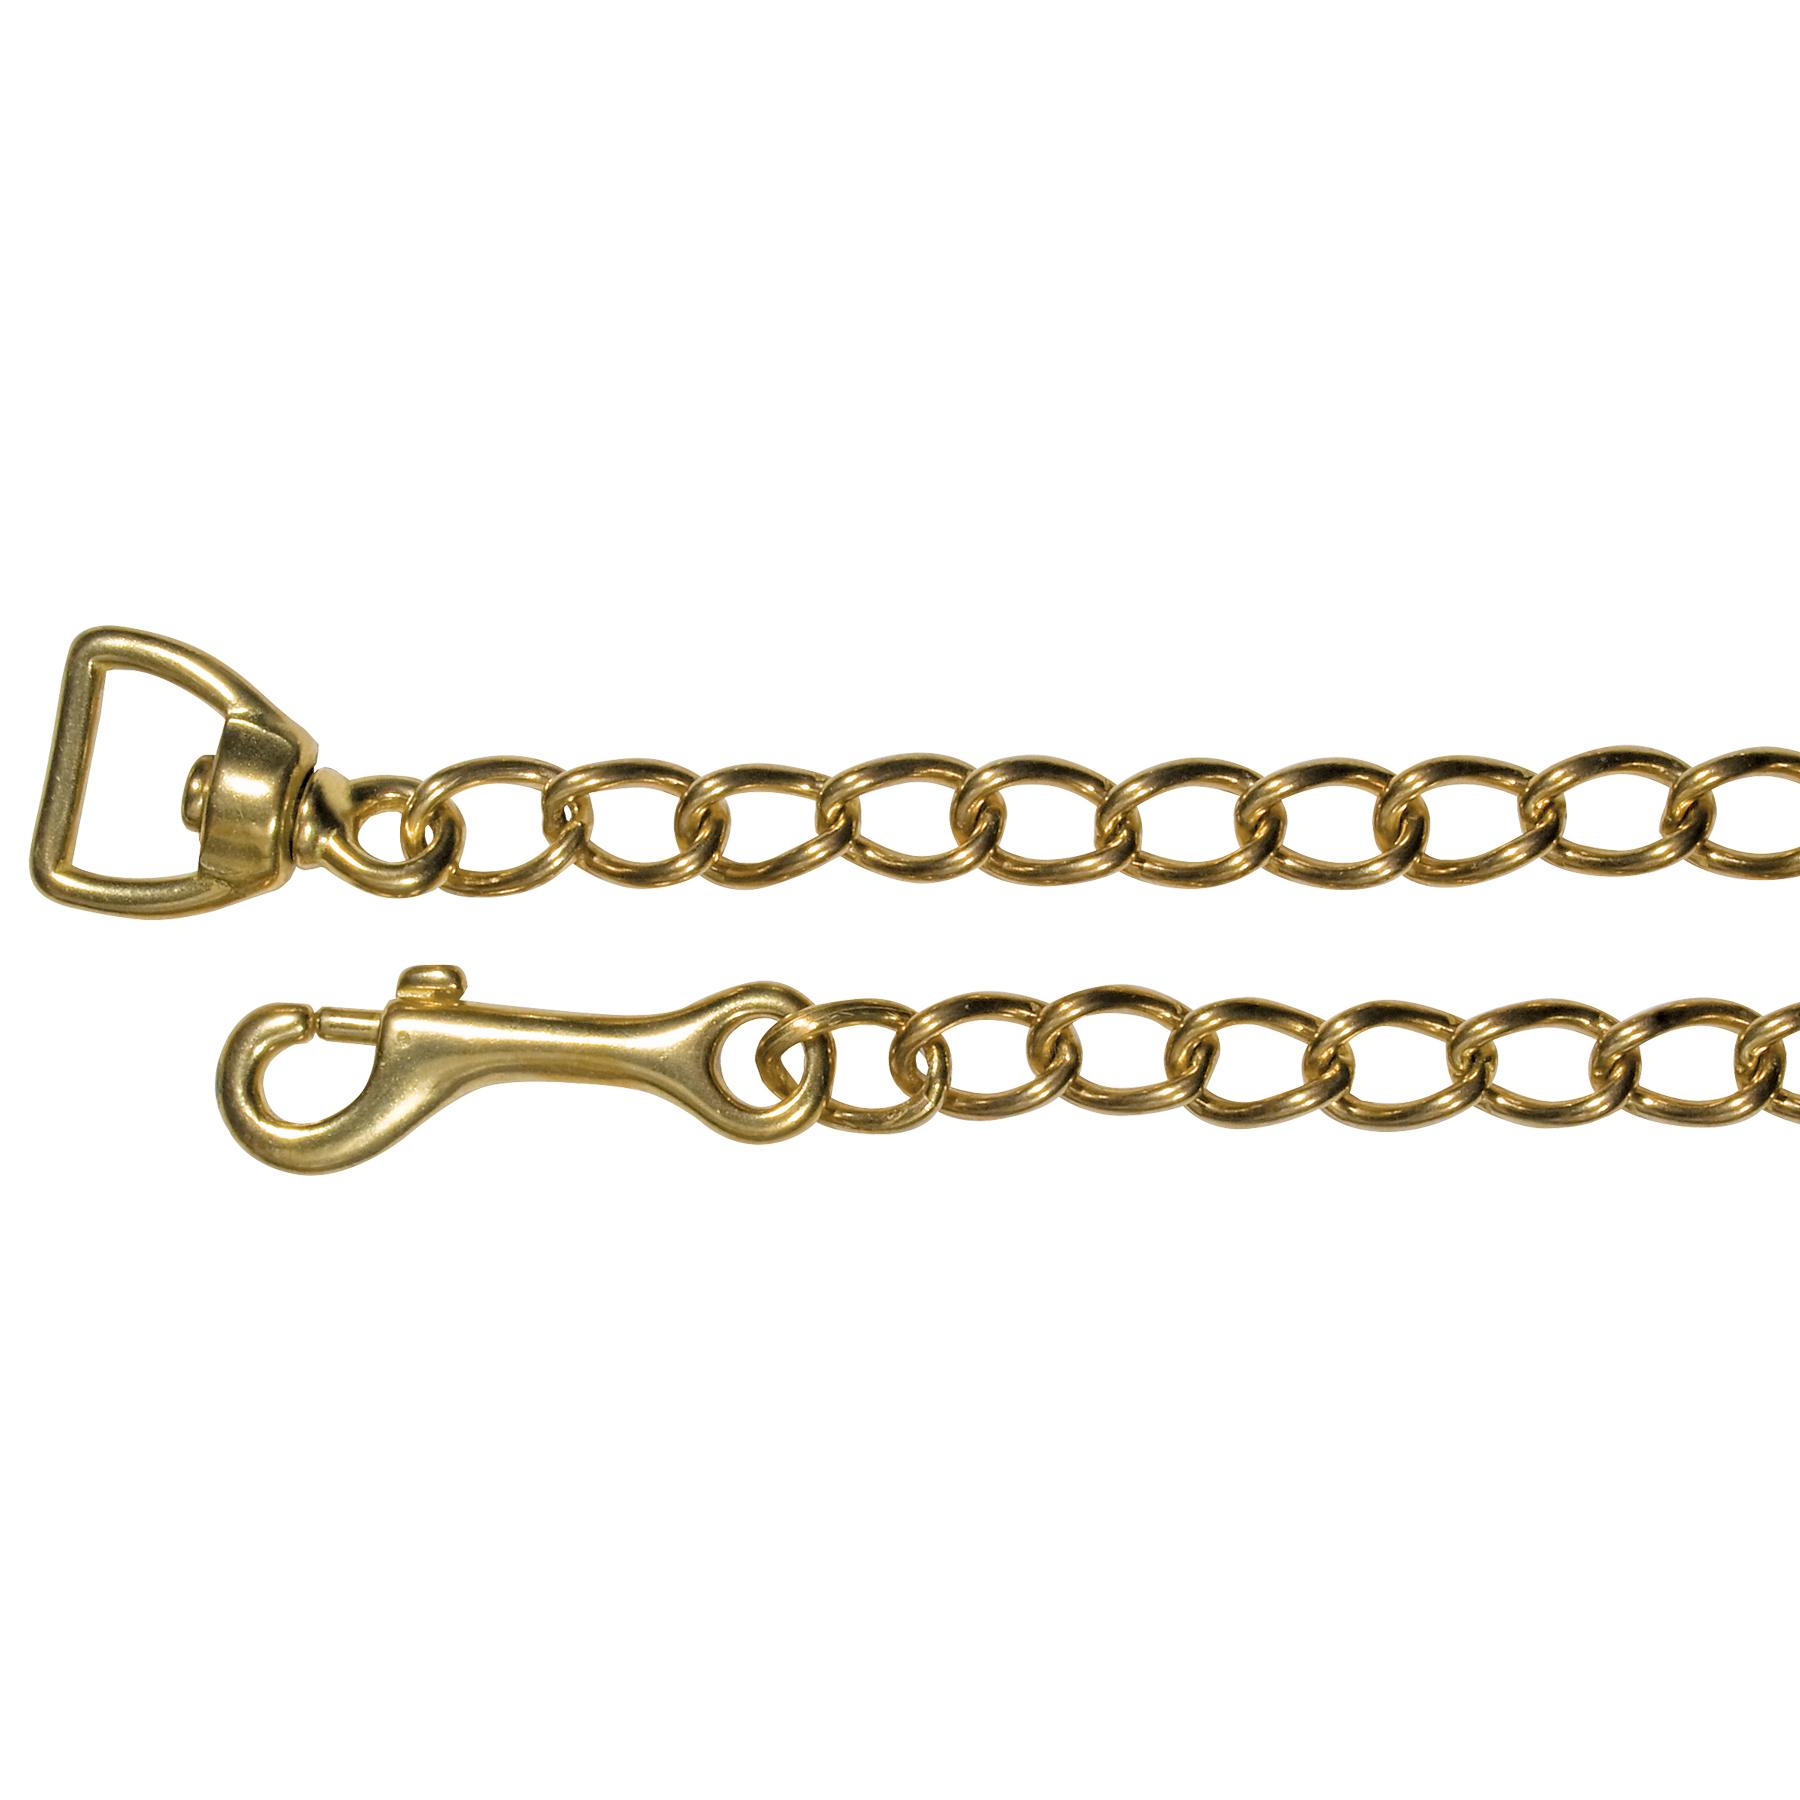 ai02524 Heavy Duty Brass Plated Chain - 24